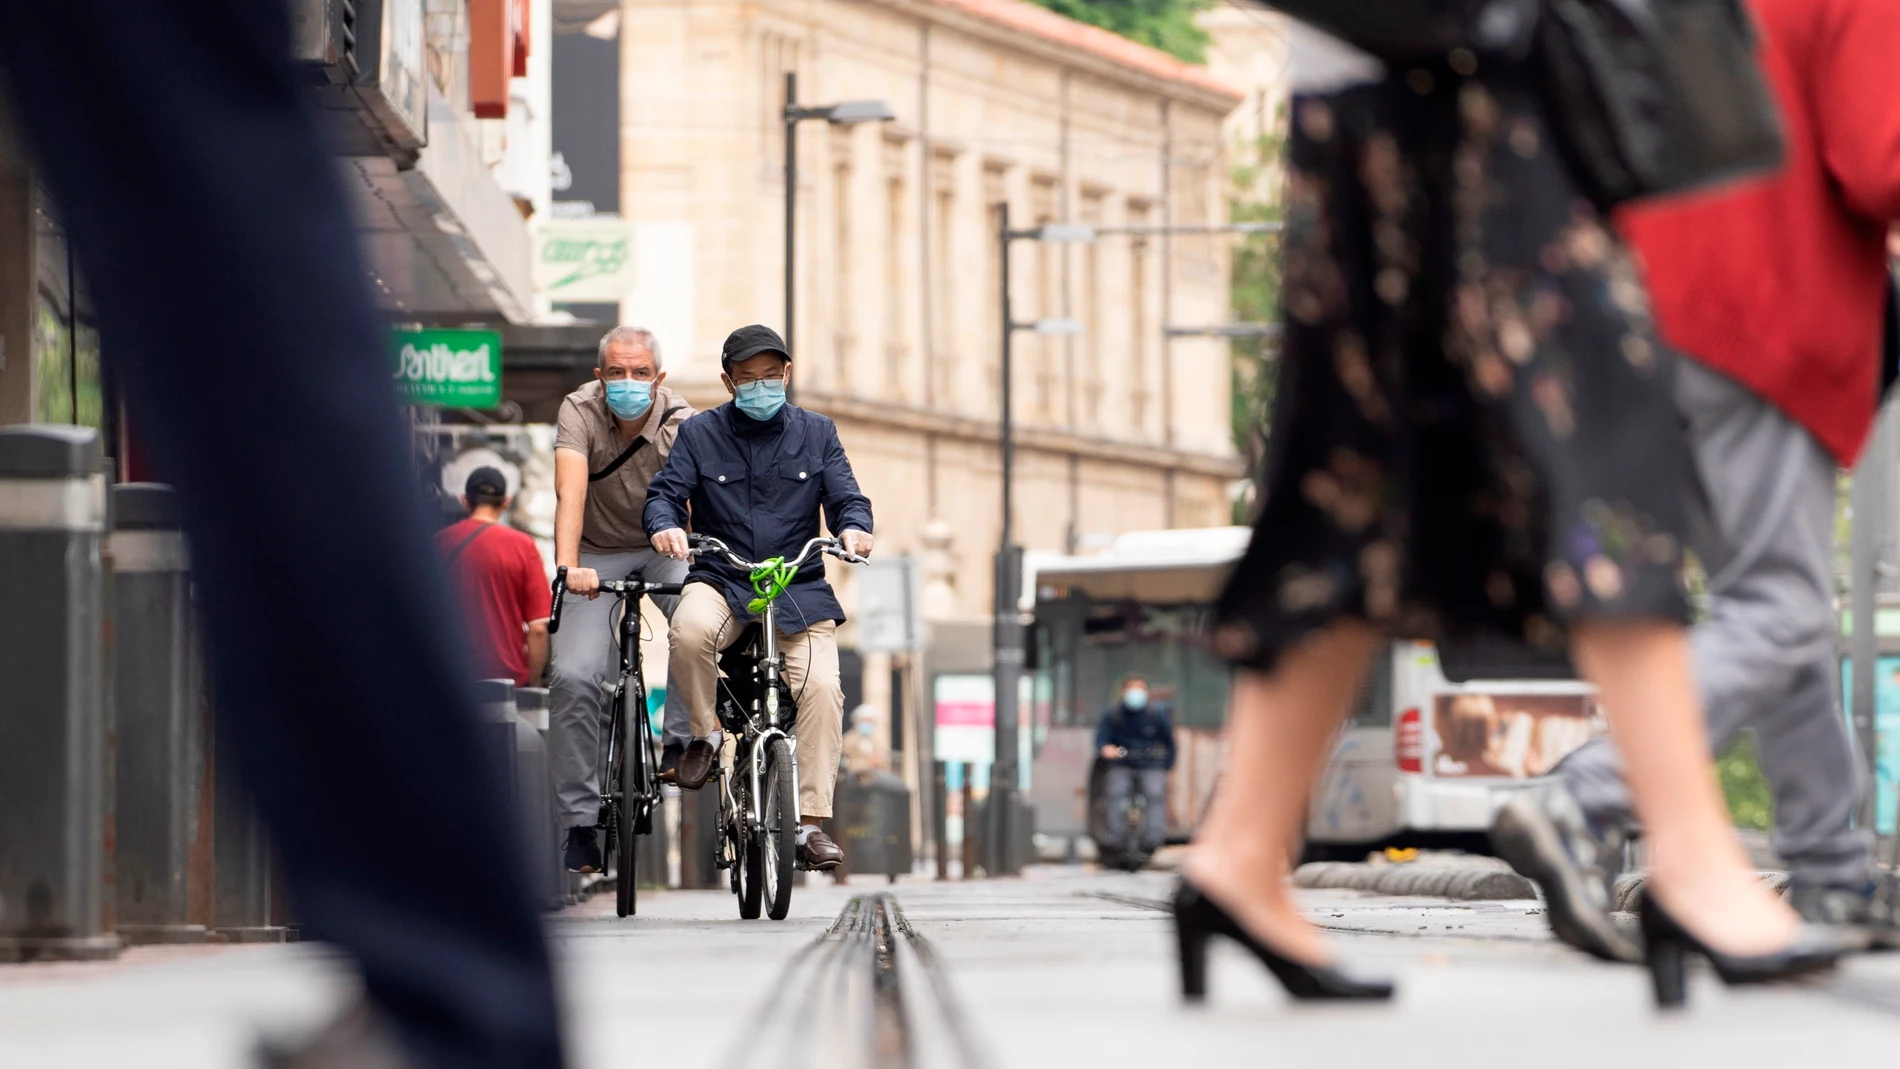 Dos personas circulan en bicicleta por una calle de Vitoria.